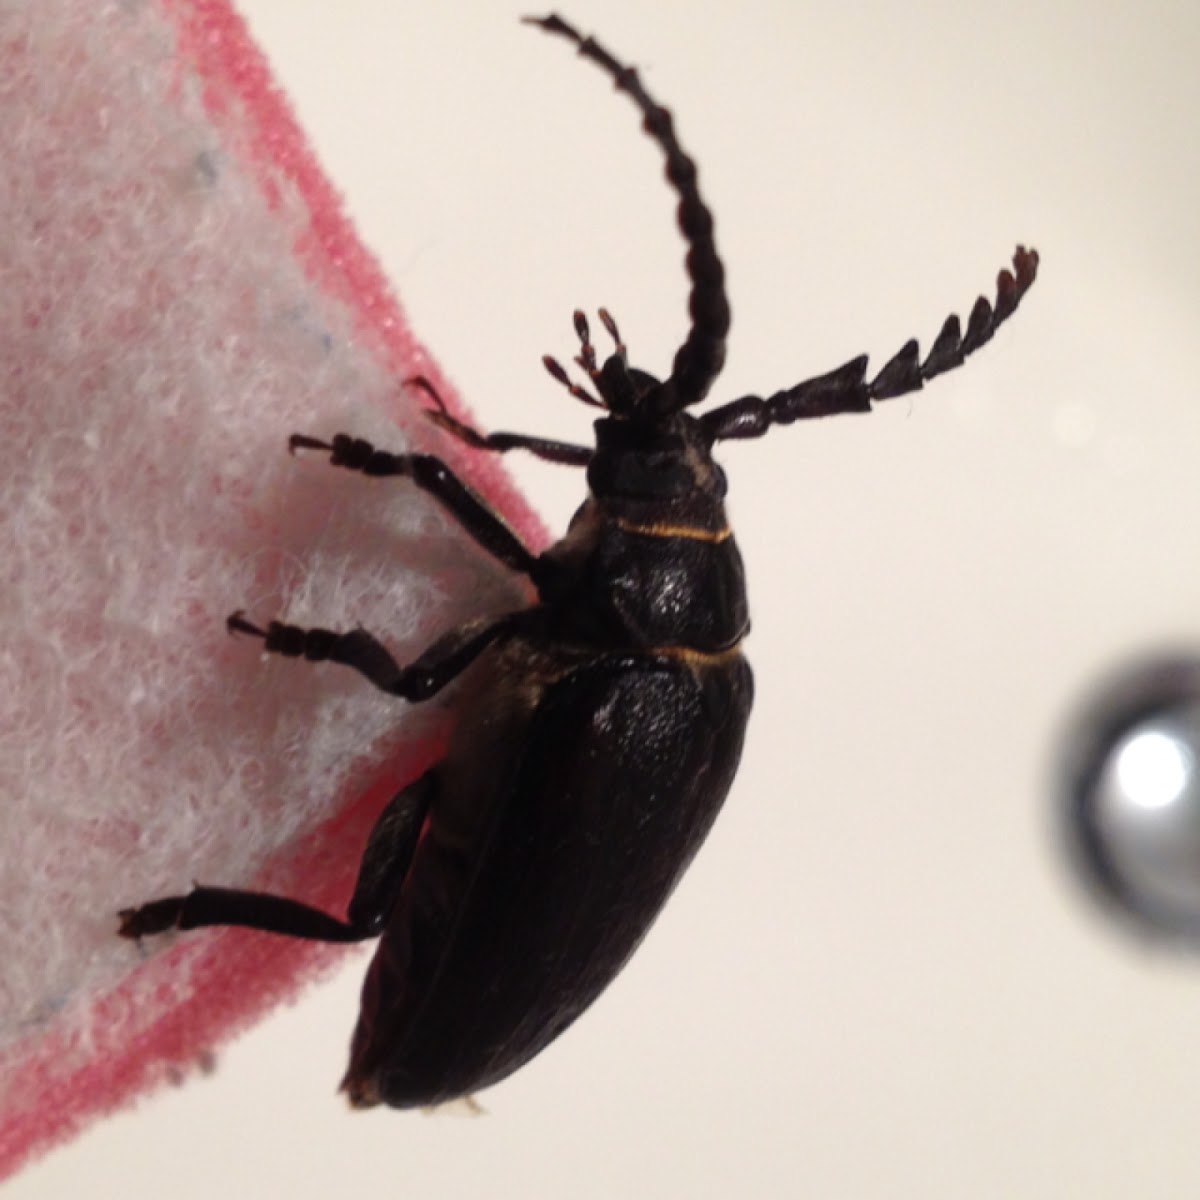 The sawyer - longhorn beetle